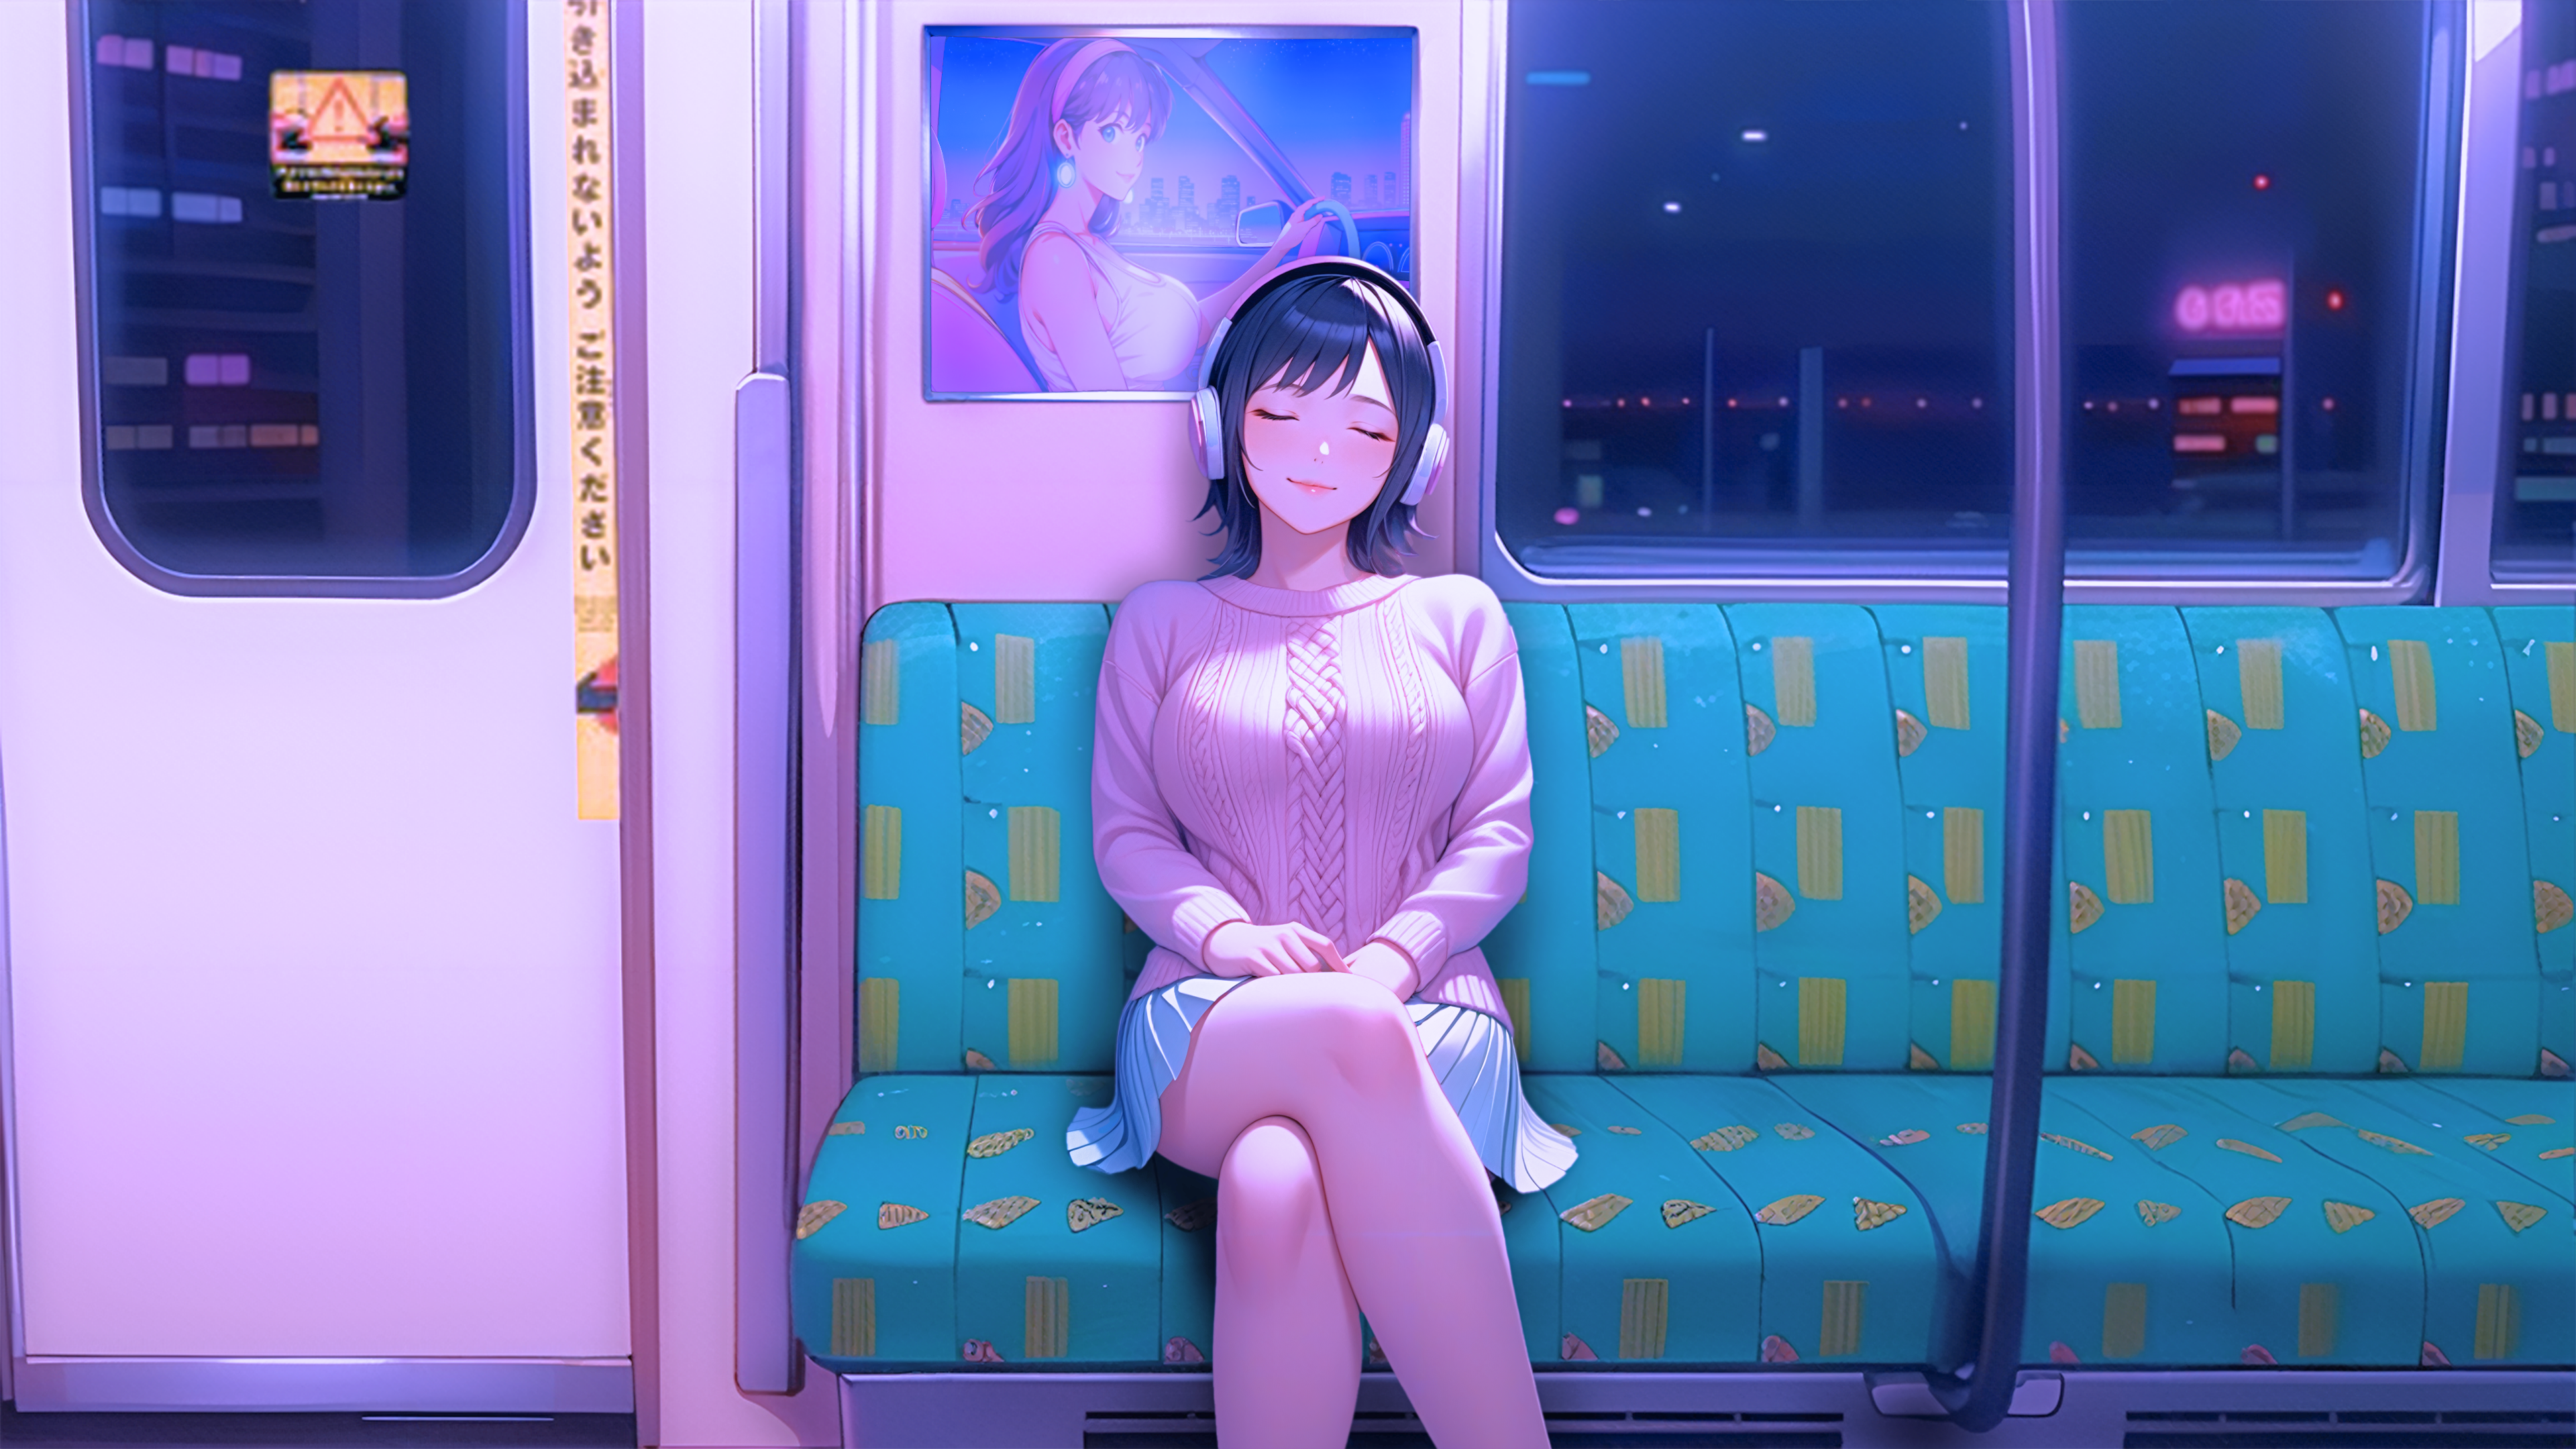 Anime 3840x2160 AI art anime girls subway neon headphones blue skirt legs crossed closed eyes vehicle interiors smiling pink sweater relaxing